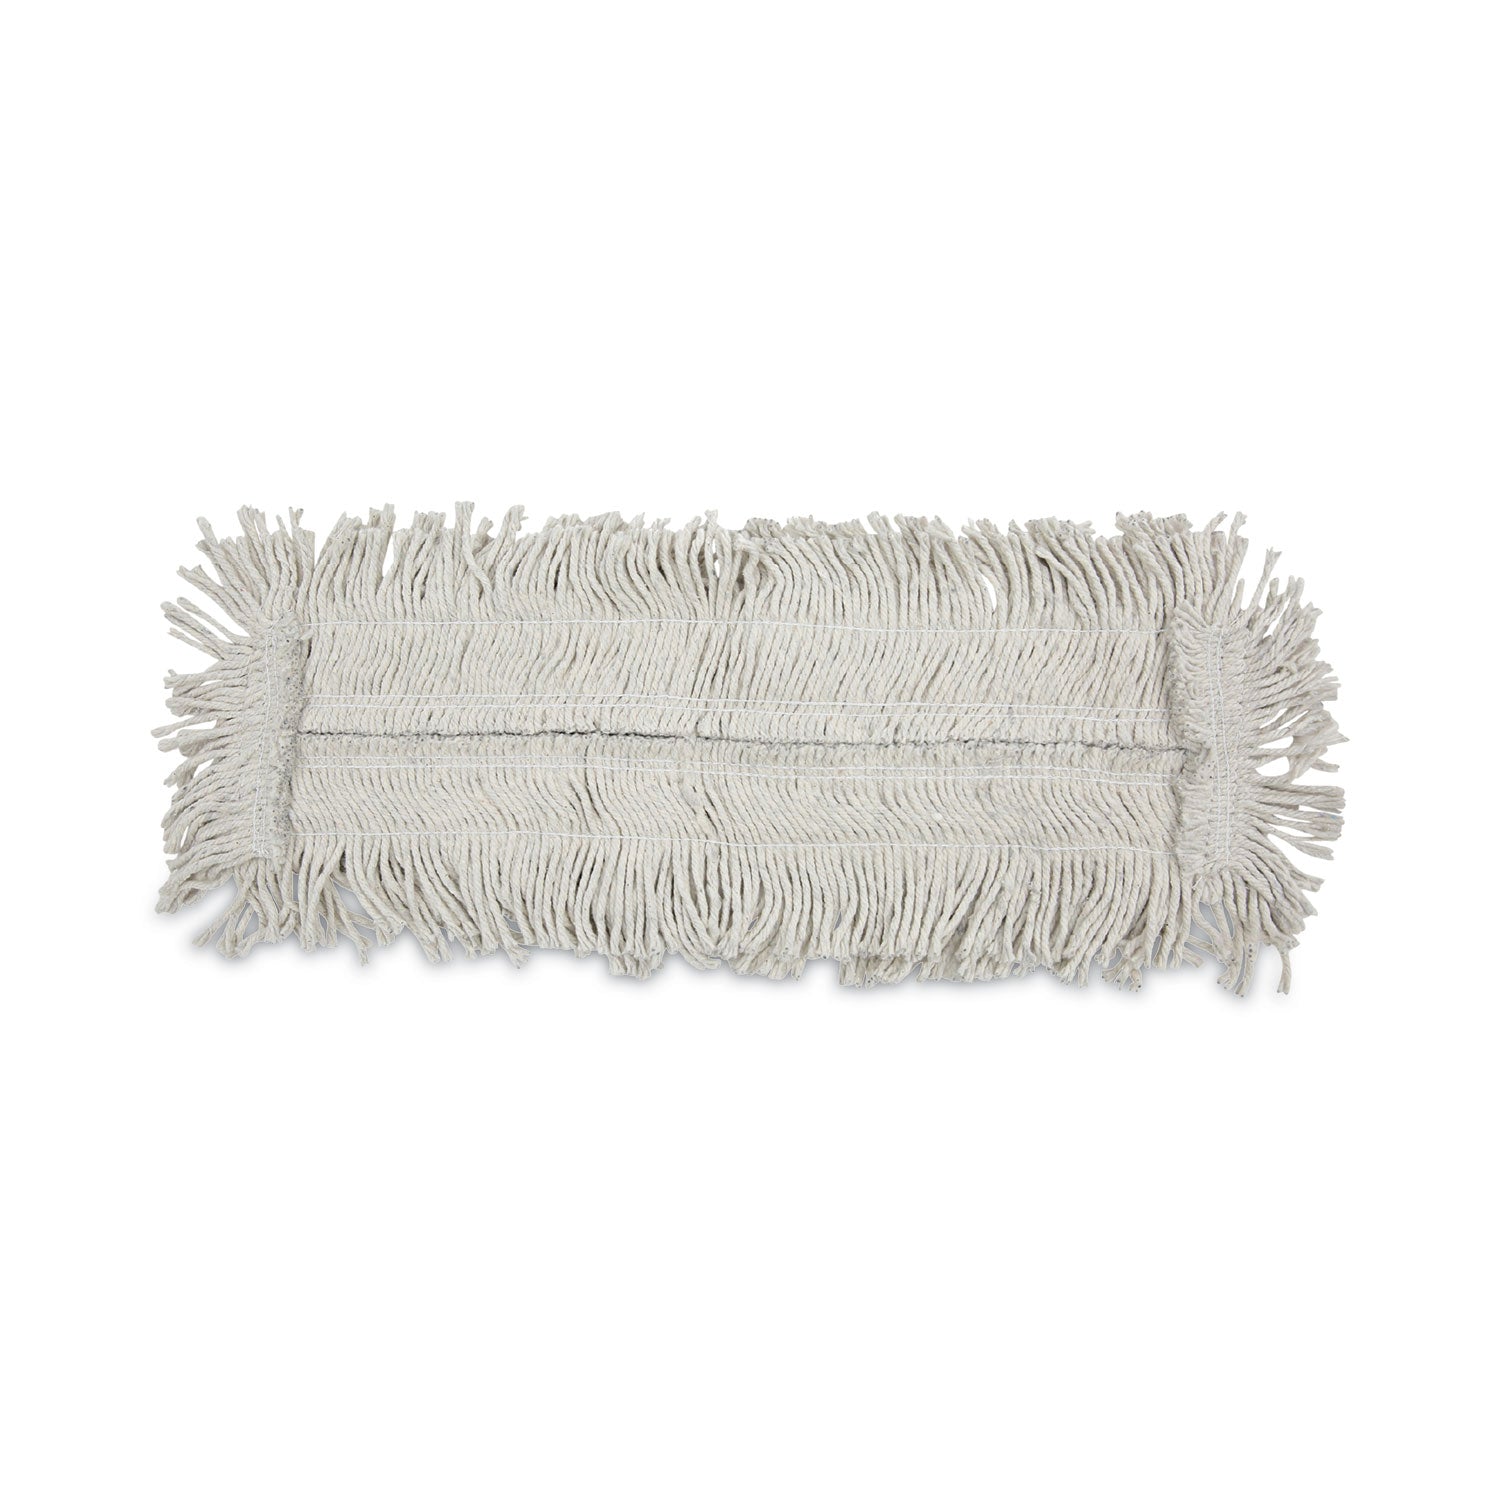 Disposable Cut End Dust Mop Head, Cotton/Synthetic, 24w x 5d, White - 